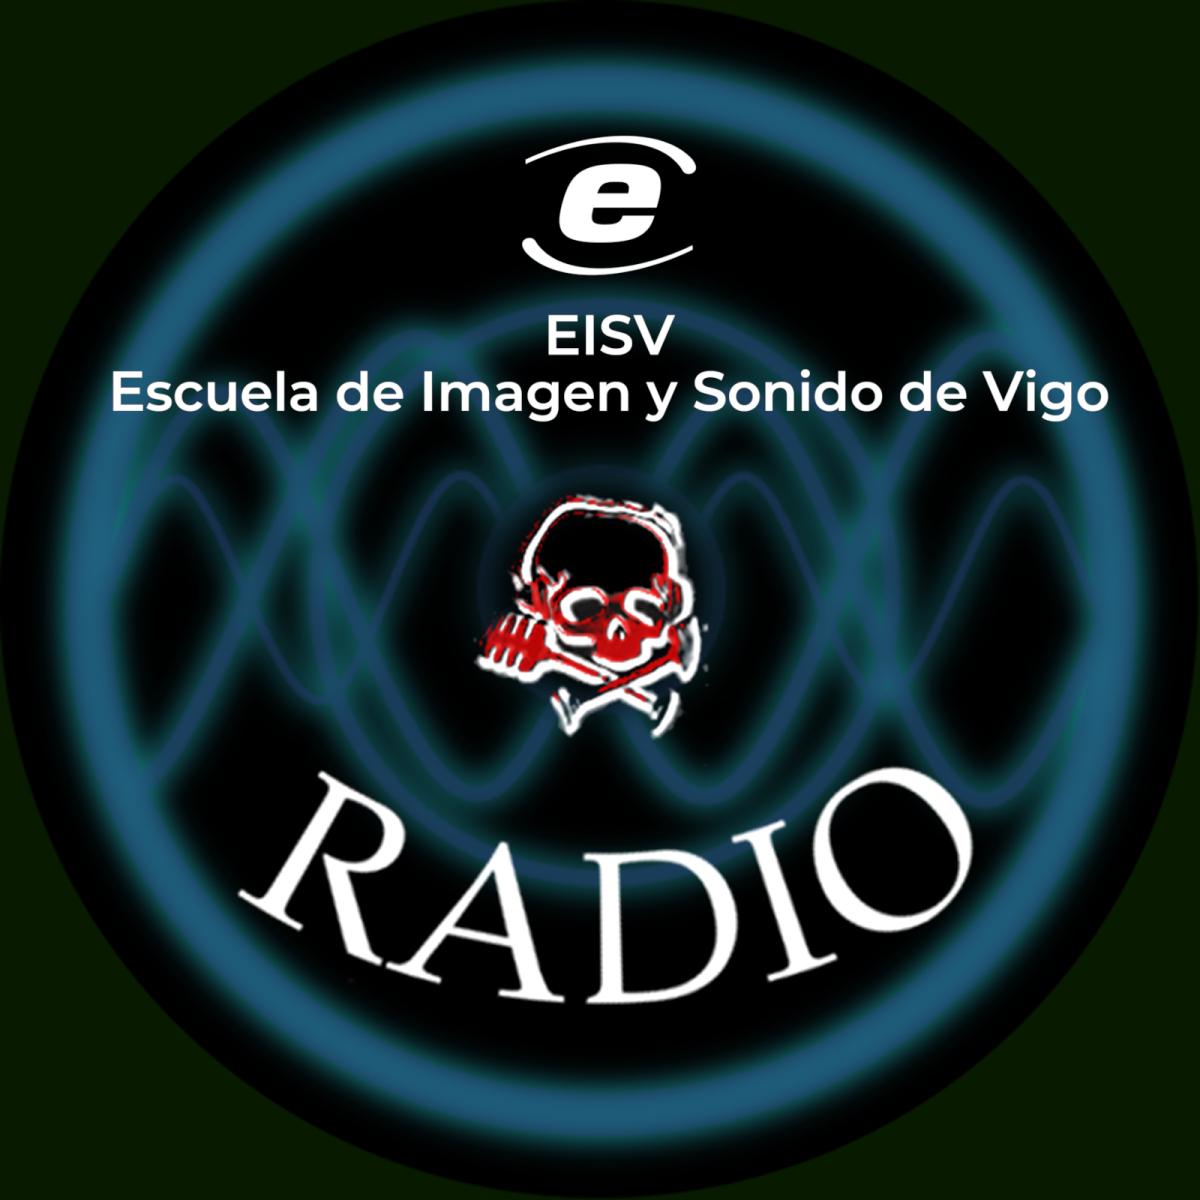 Radio EISV